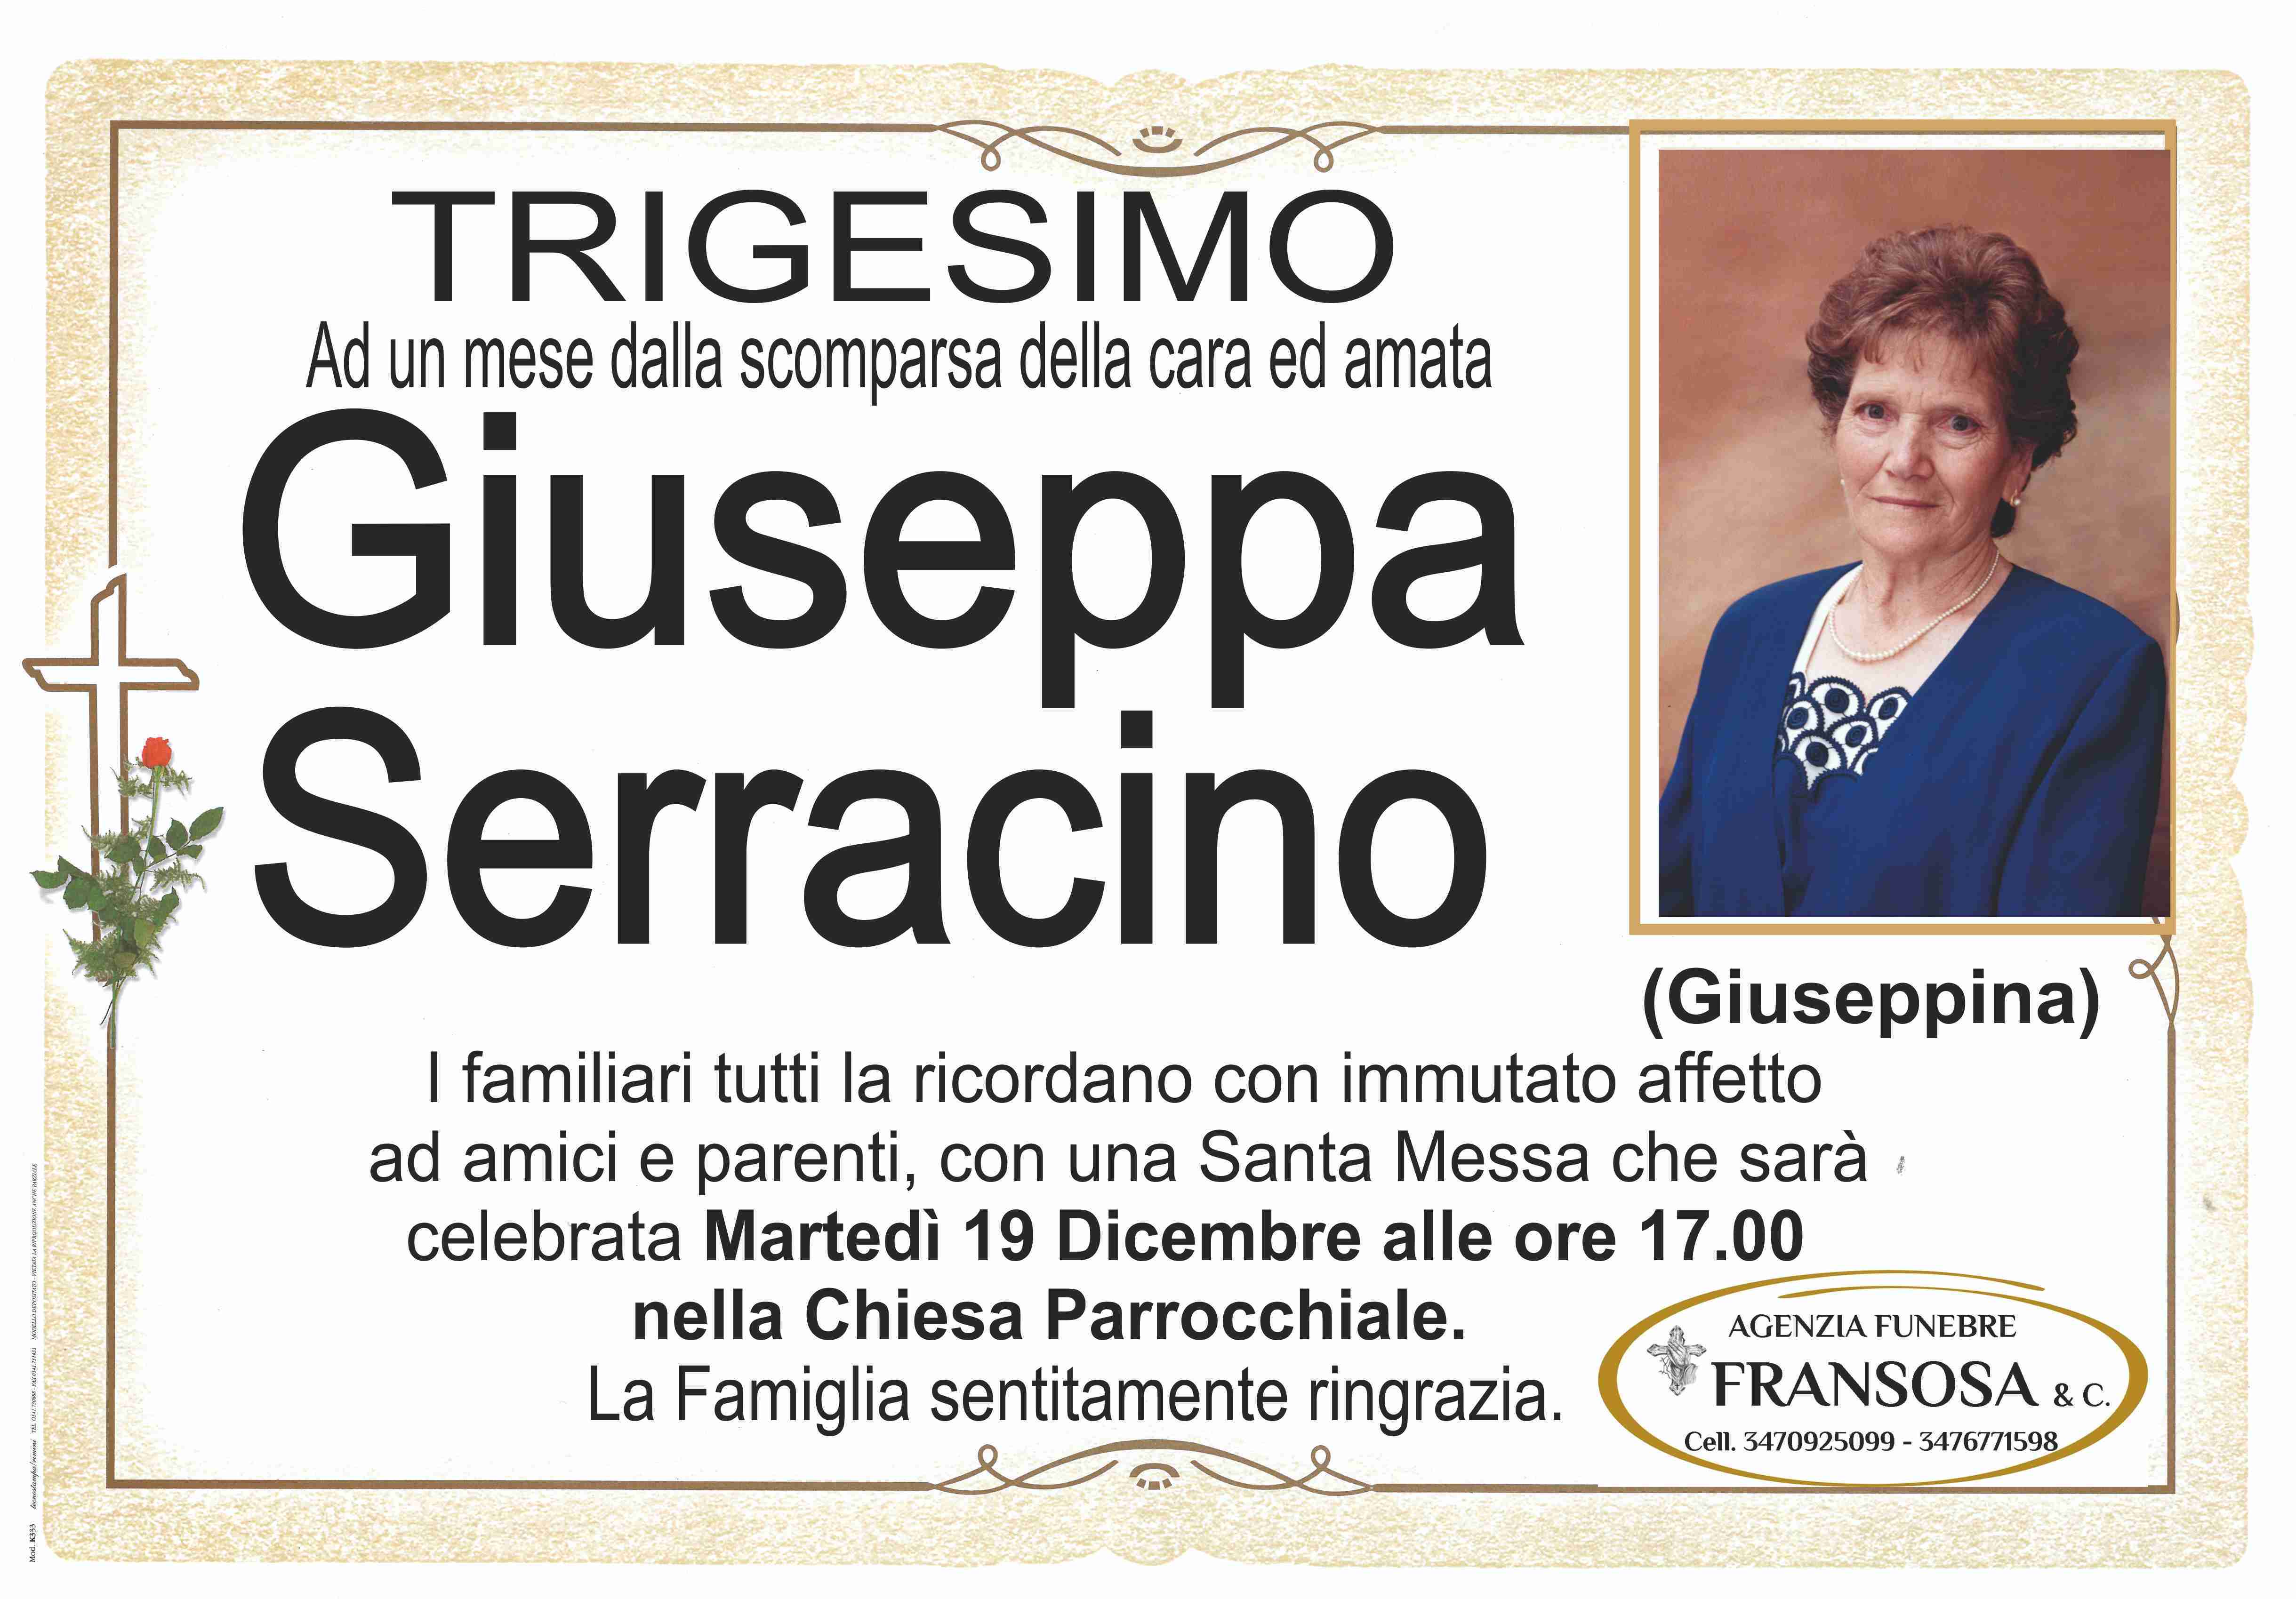 Giuseppa Serracino